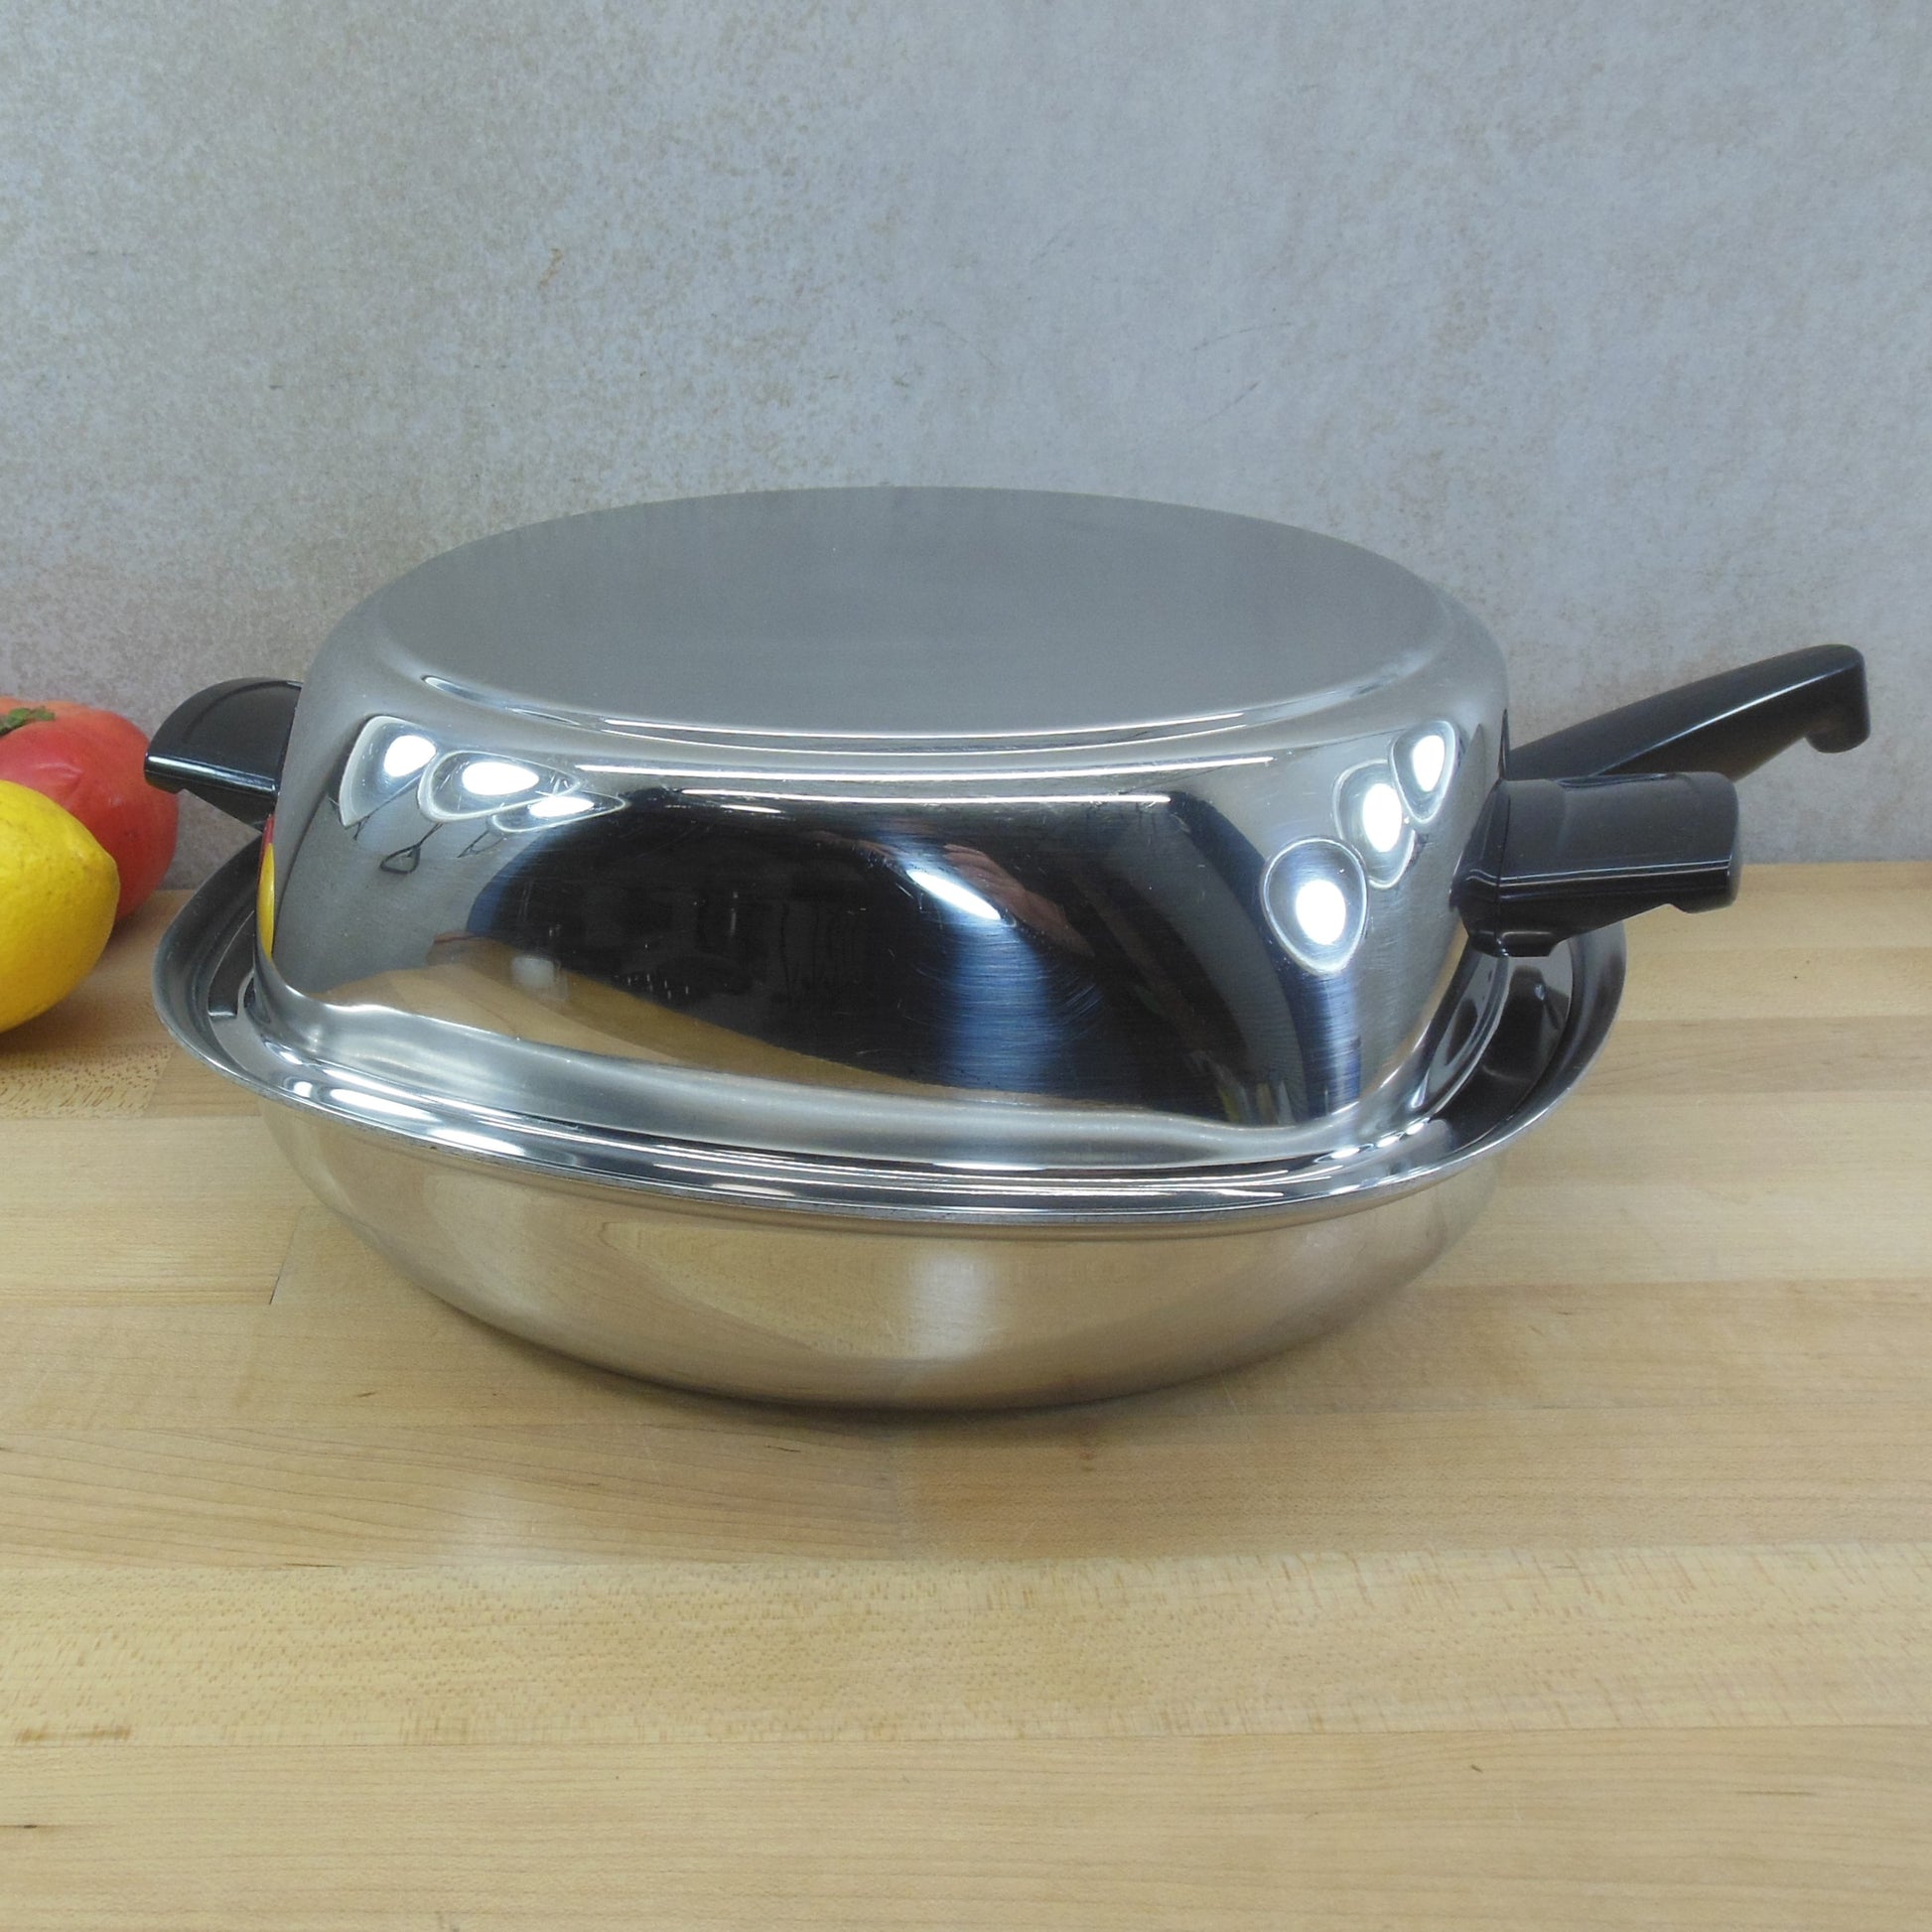 Vintage Kitchen Craft Aluminum Cookware 4-Piece Set - SITS FLAT